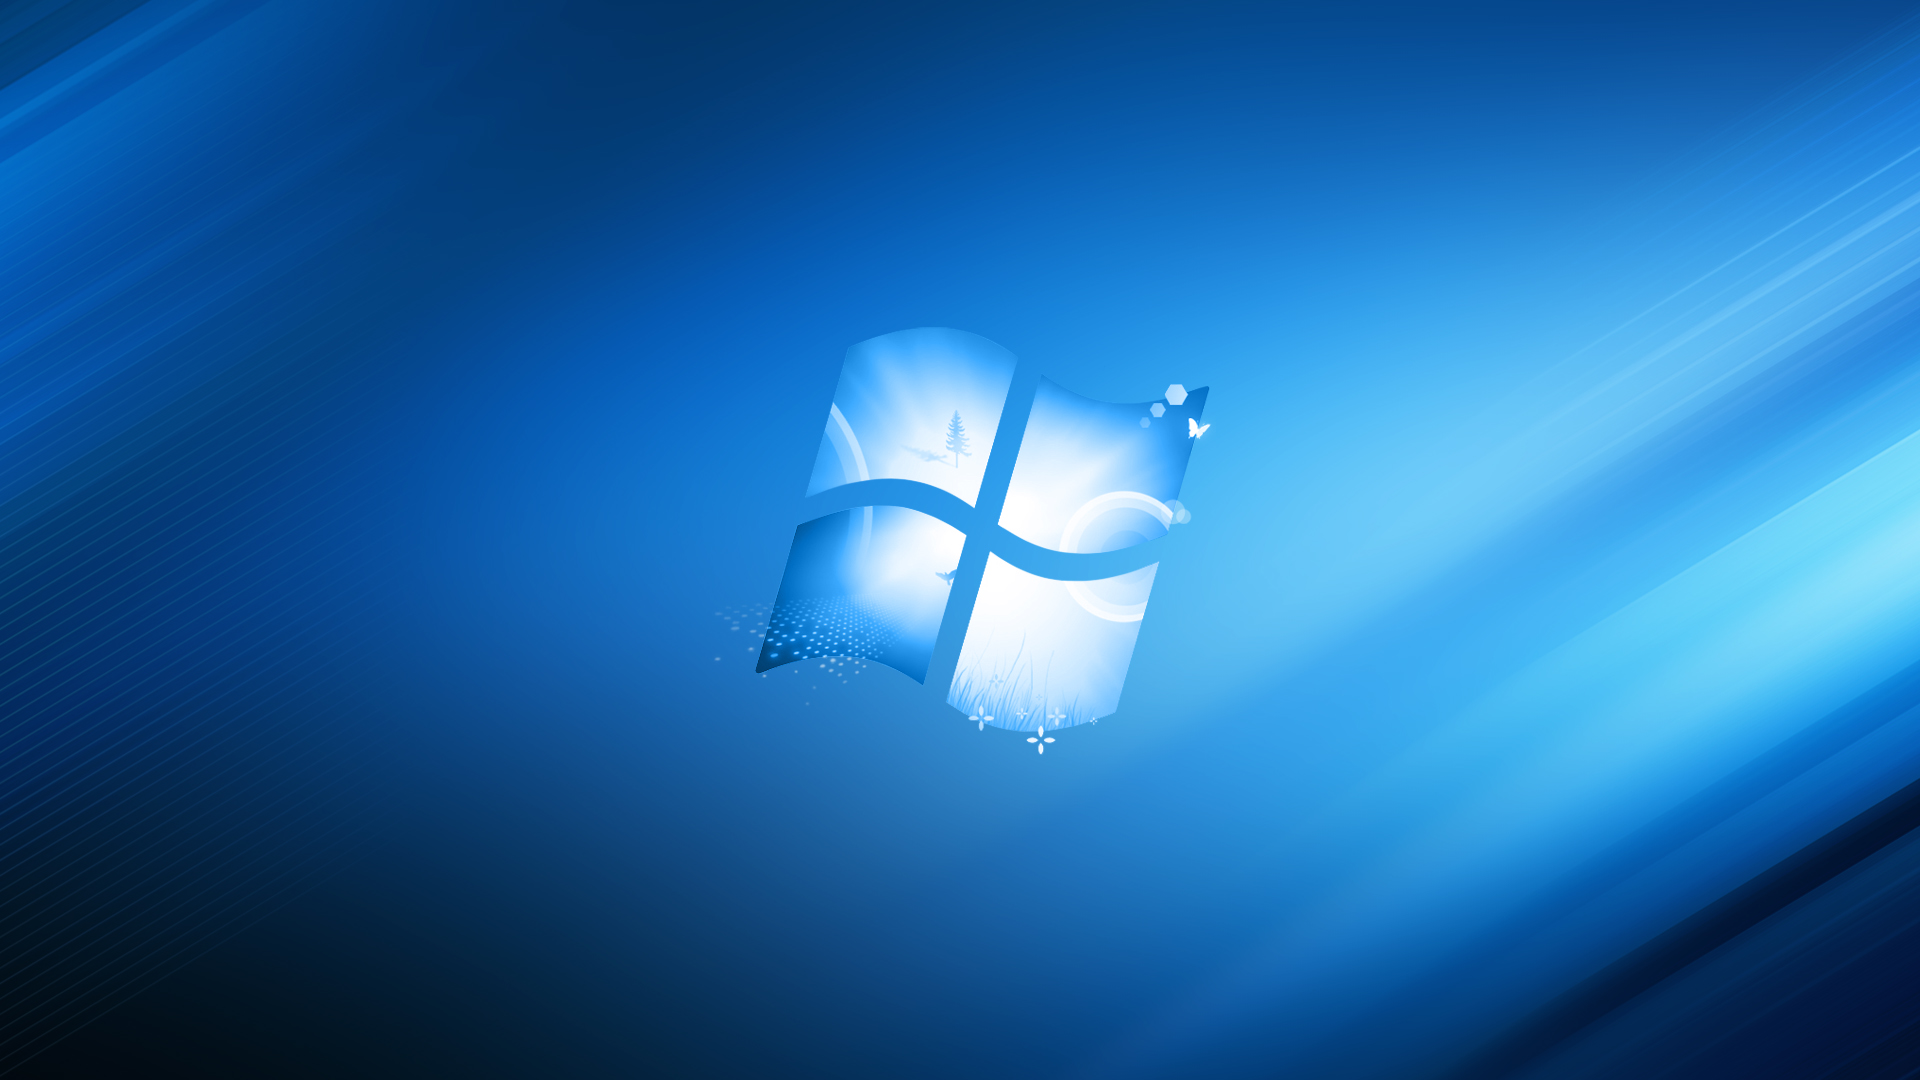 Free download Windows 8 Wallpaper 7 windows 8 28120576 ...